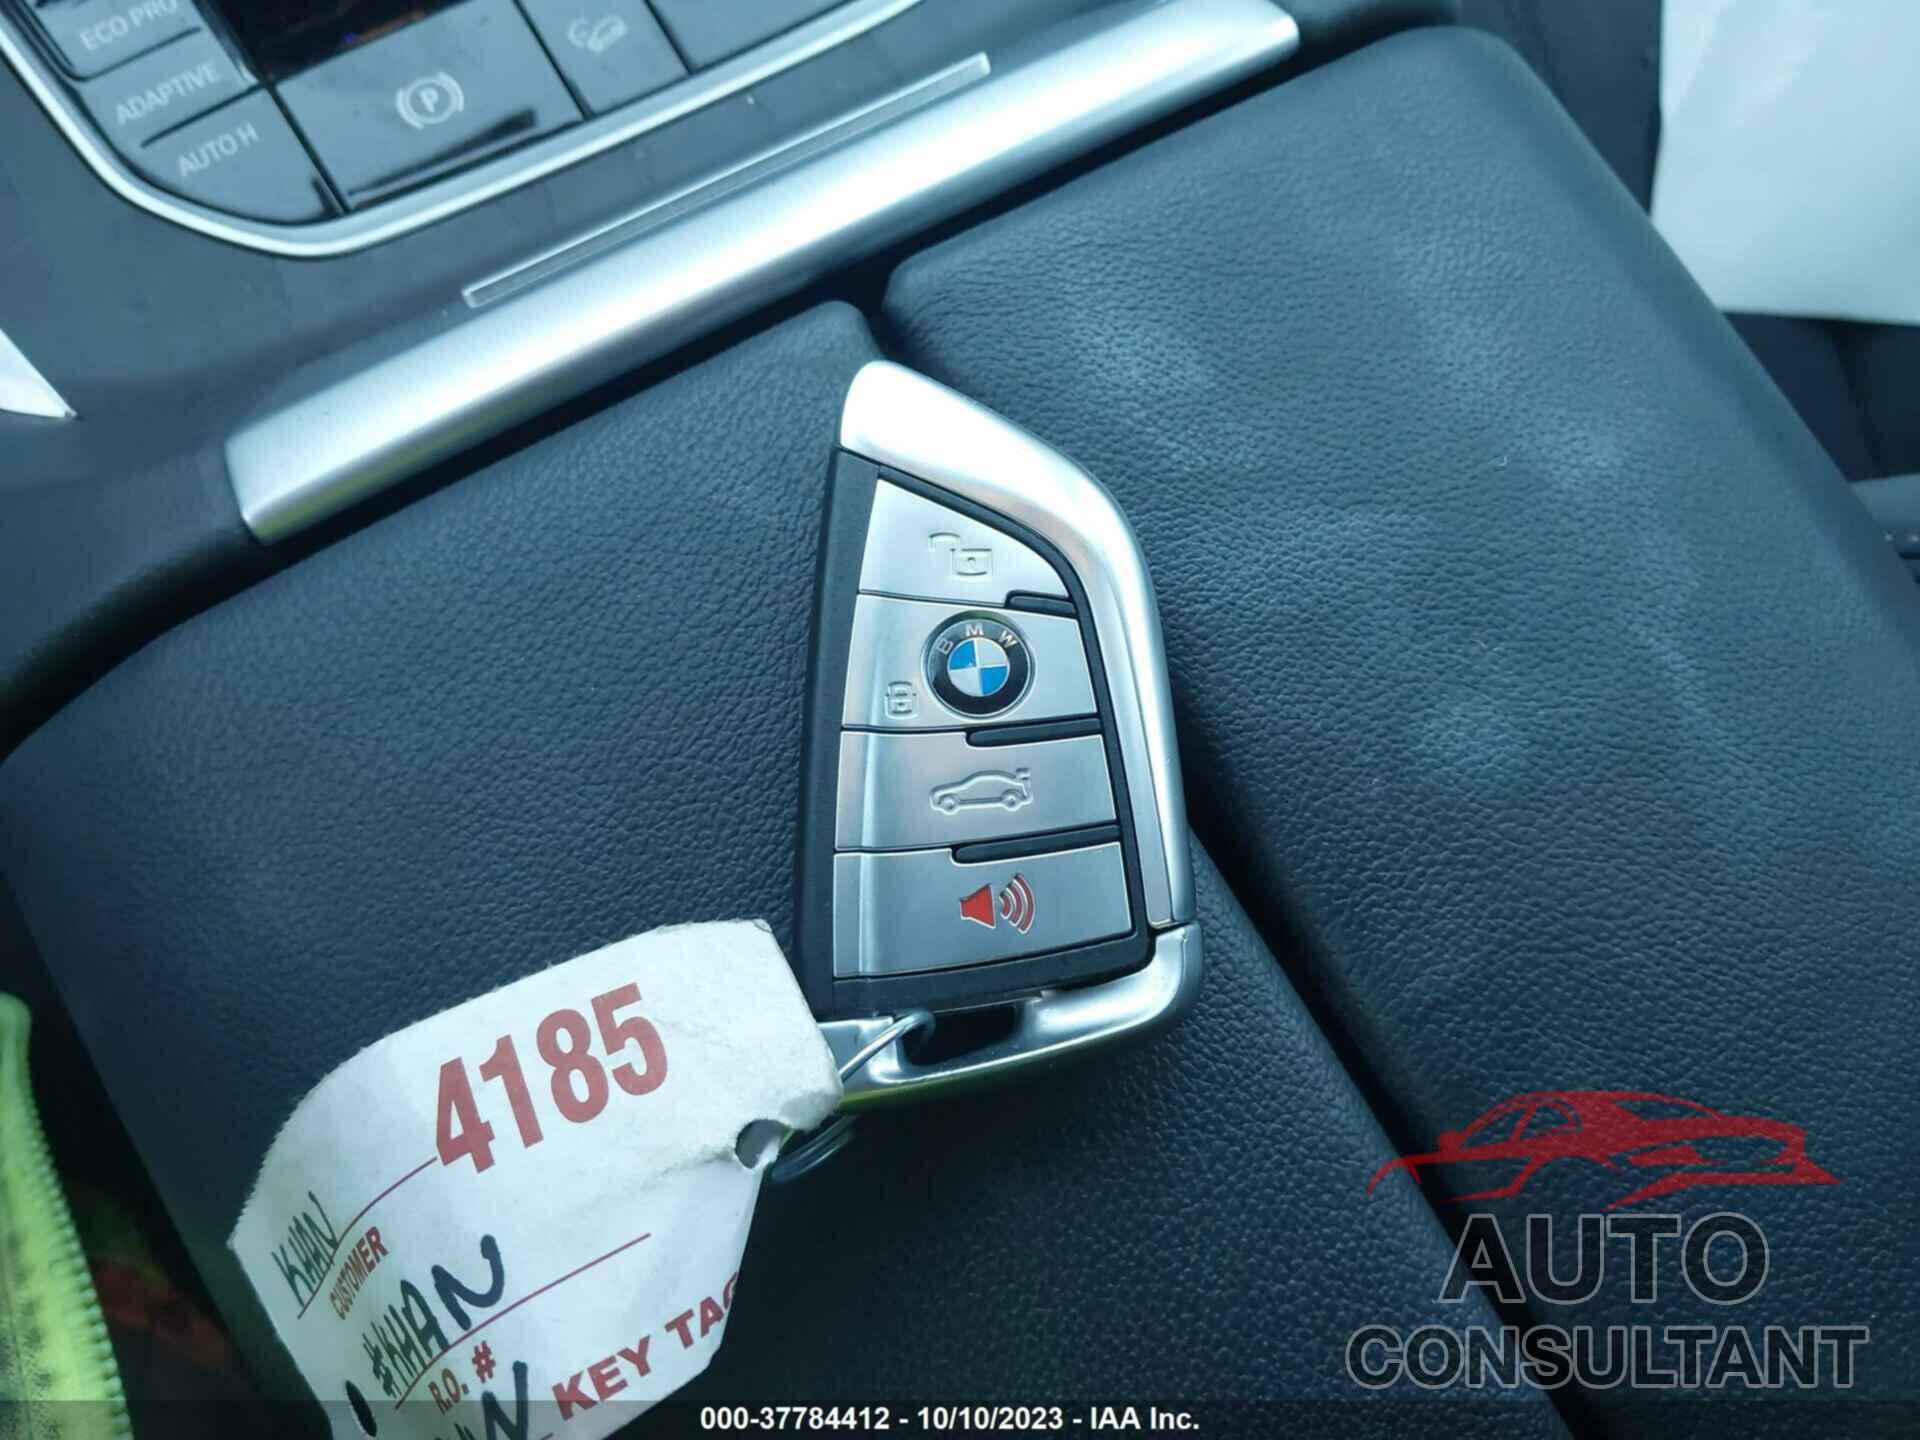 BMW X7 2021 - 5UXCW2C01M9H68205